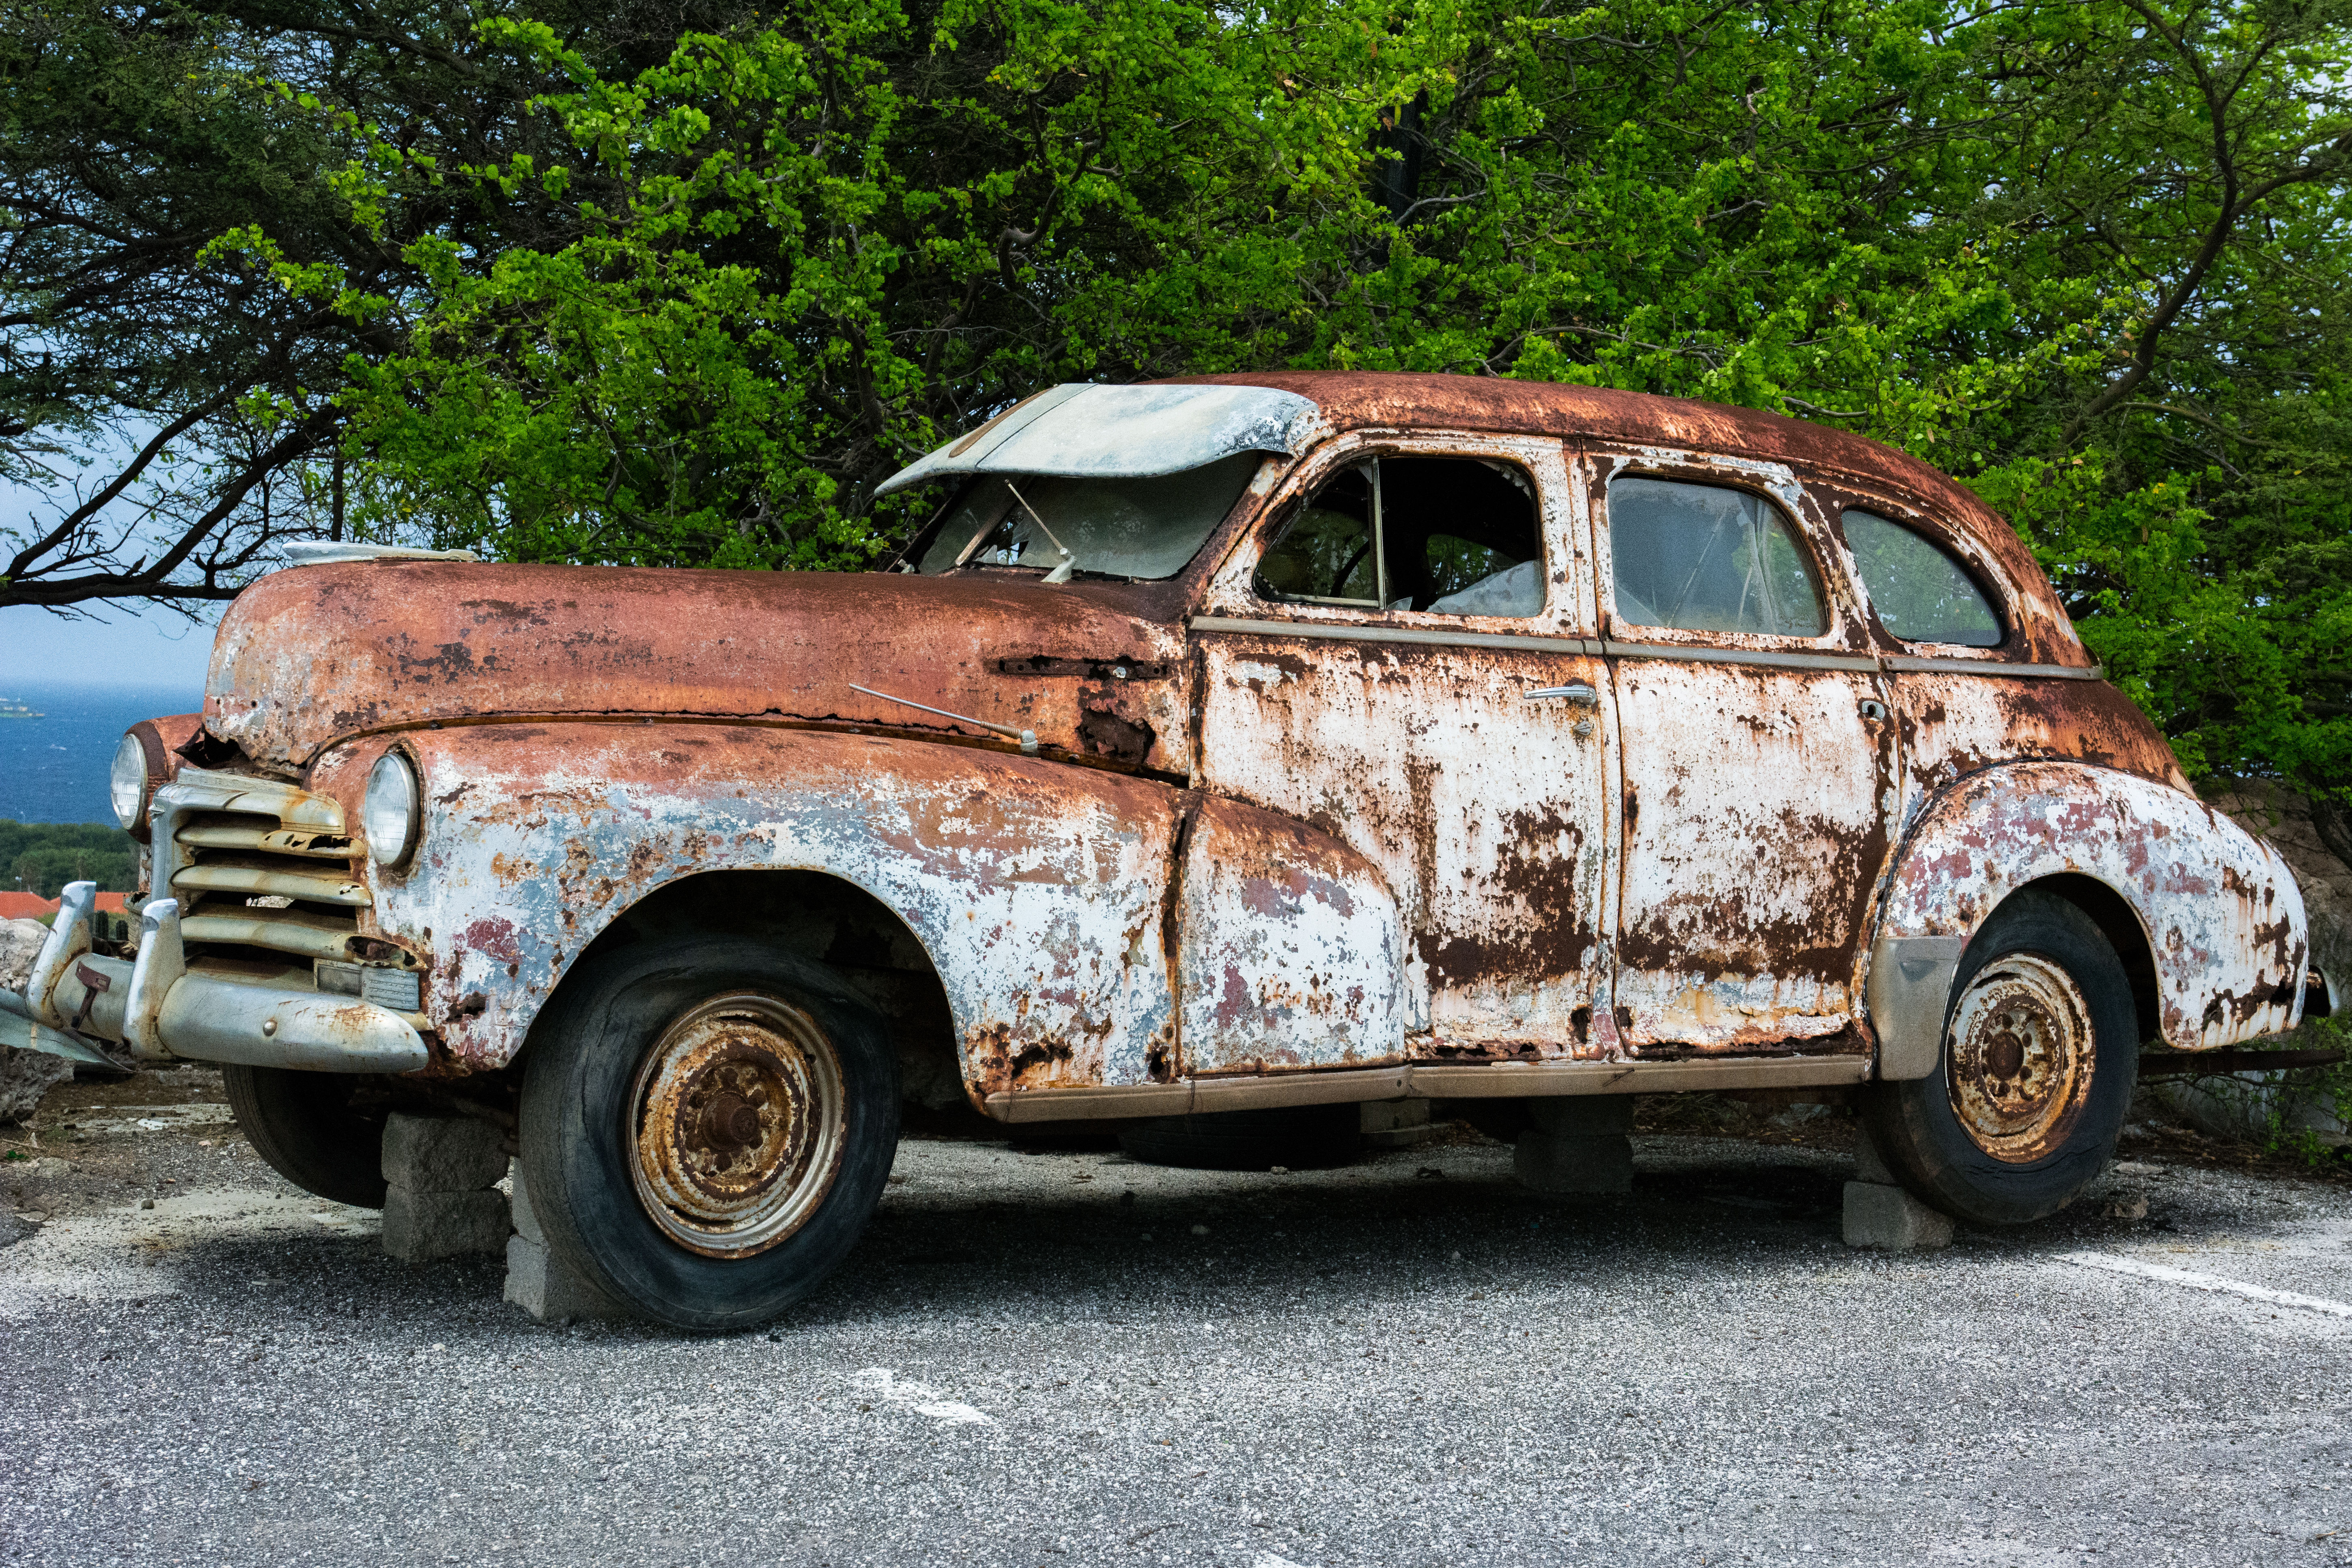 Free Images : old, rust, broken, motor vehicle, vintage car, wreck ...